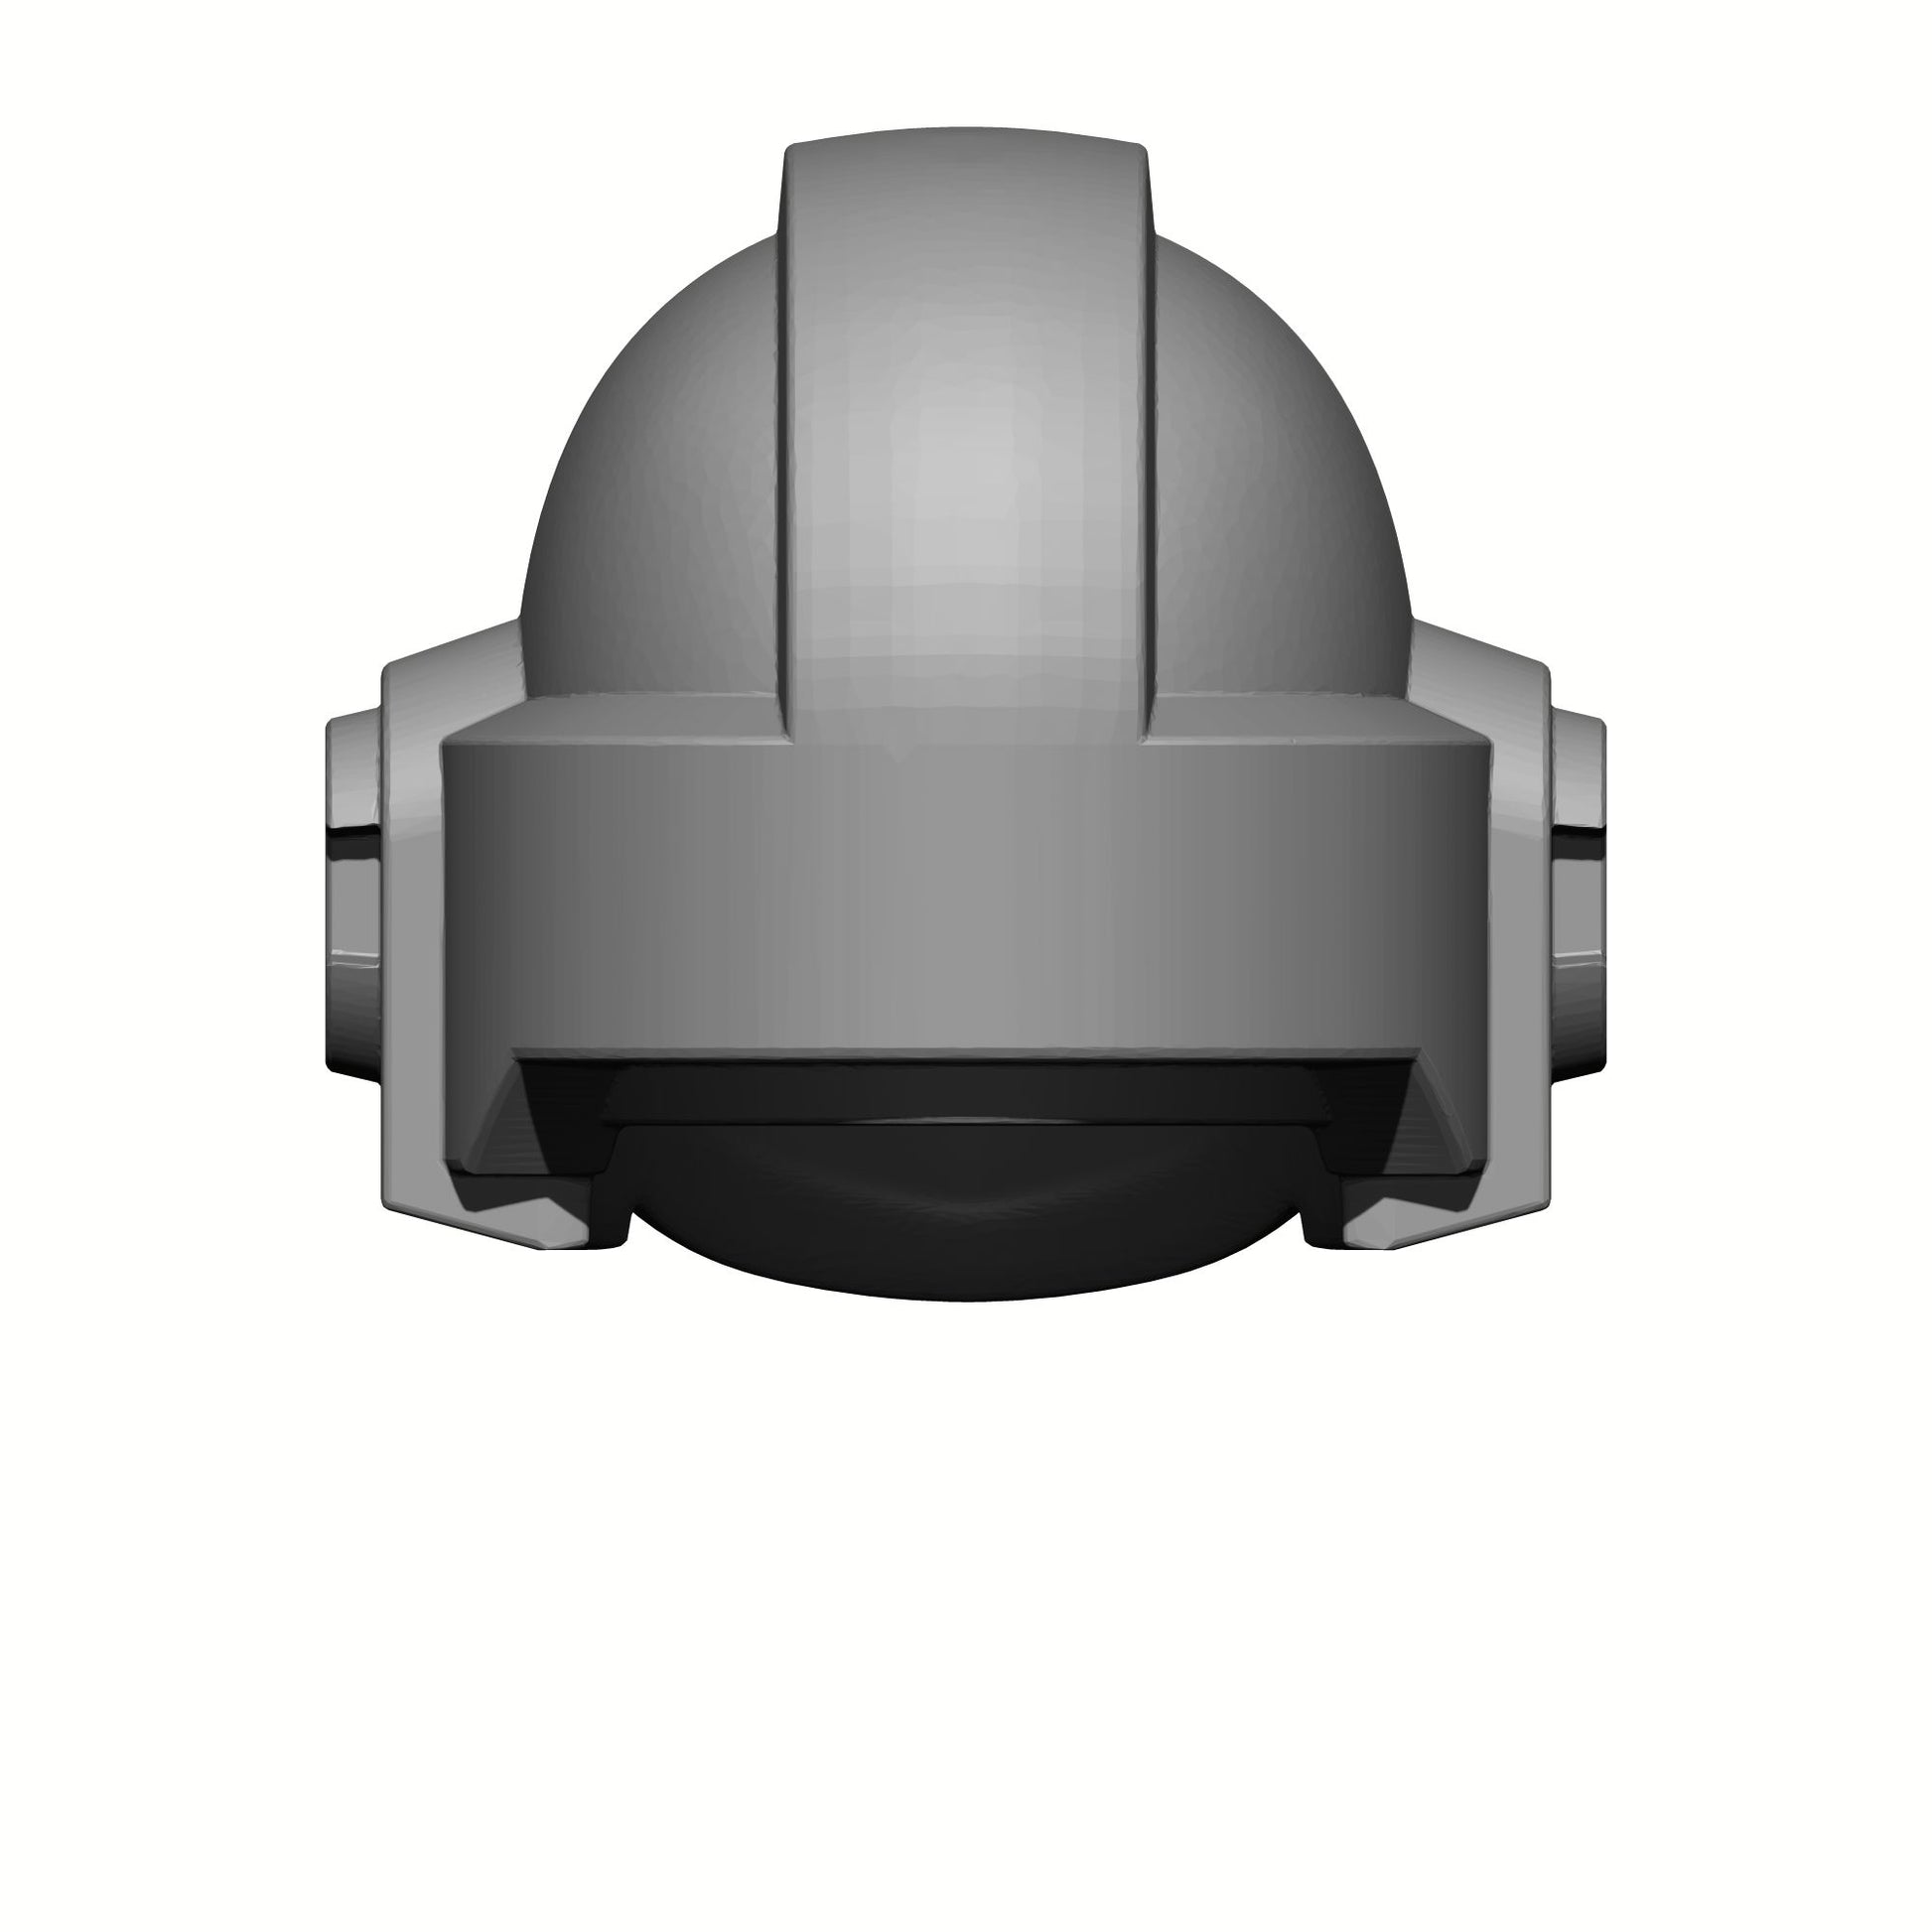 Back of the Raven Gaurd MKVI Helmet Compatible with McFarlane Toys Space Marine Action Figures